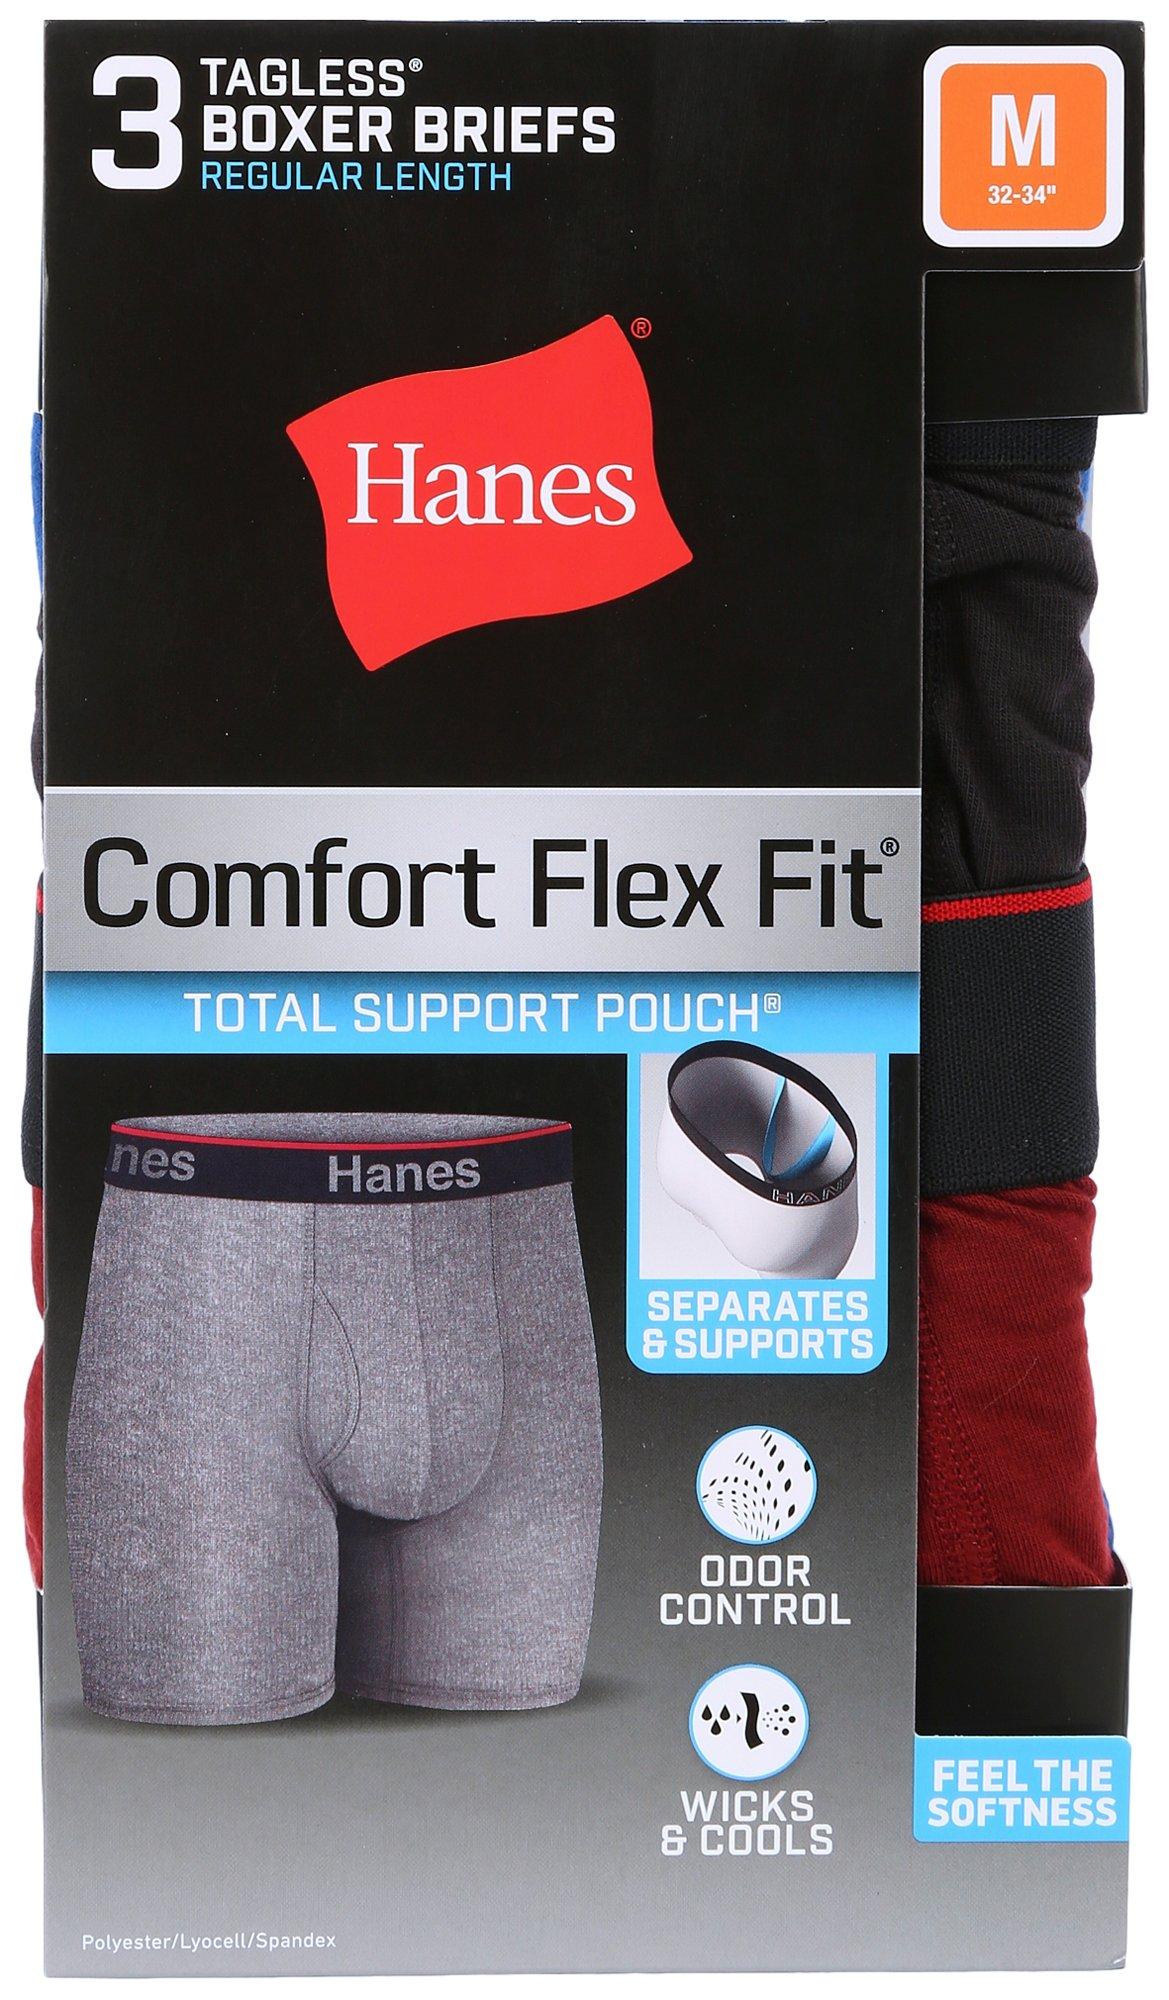 Mens 3-Pk. Solid Comfort Flex Fit Boxer Briefs